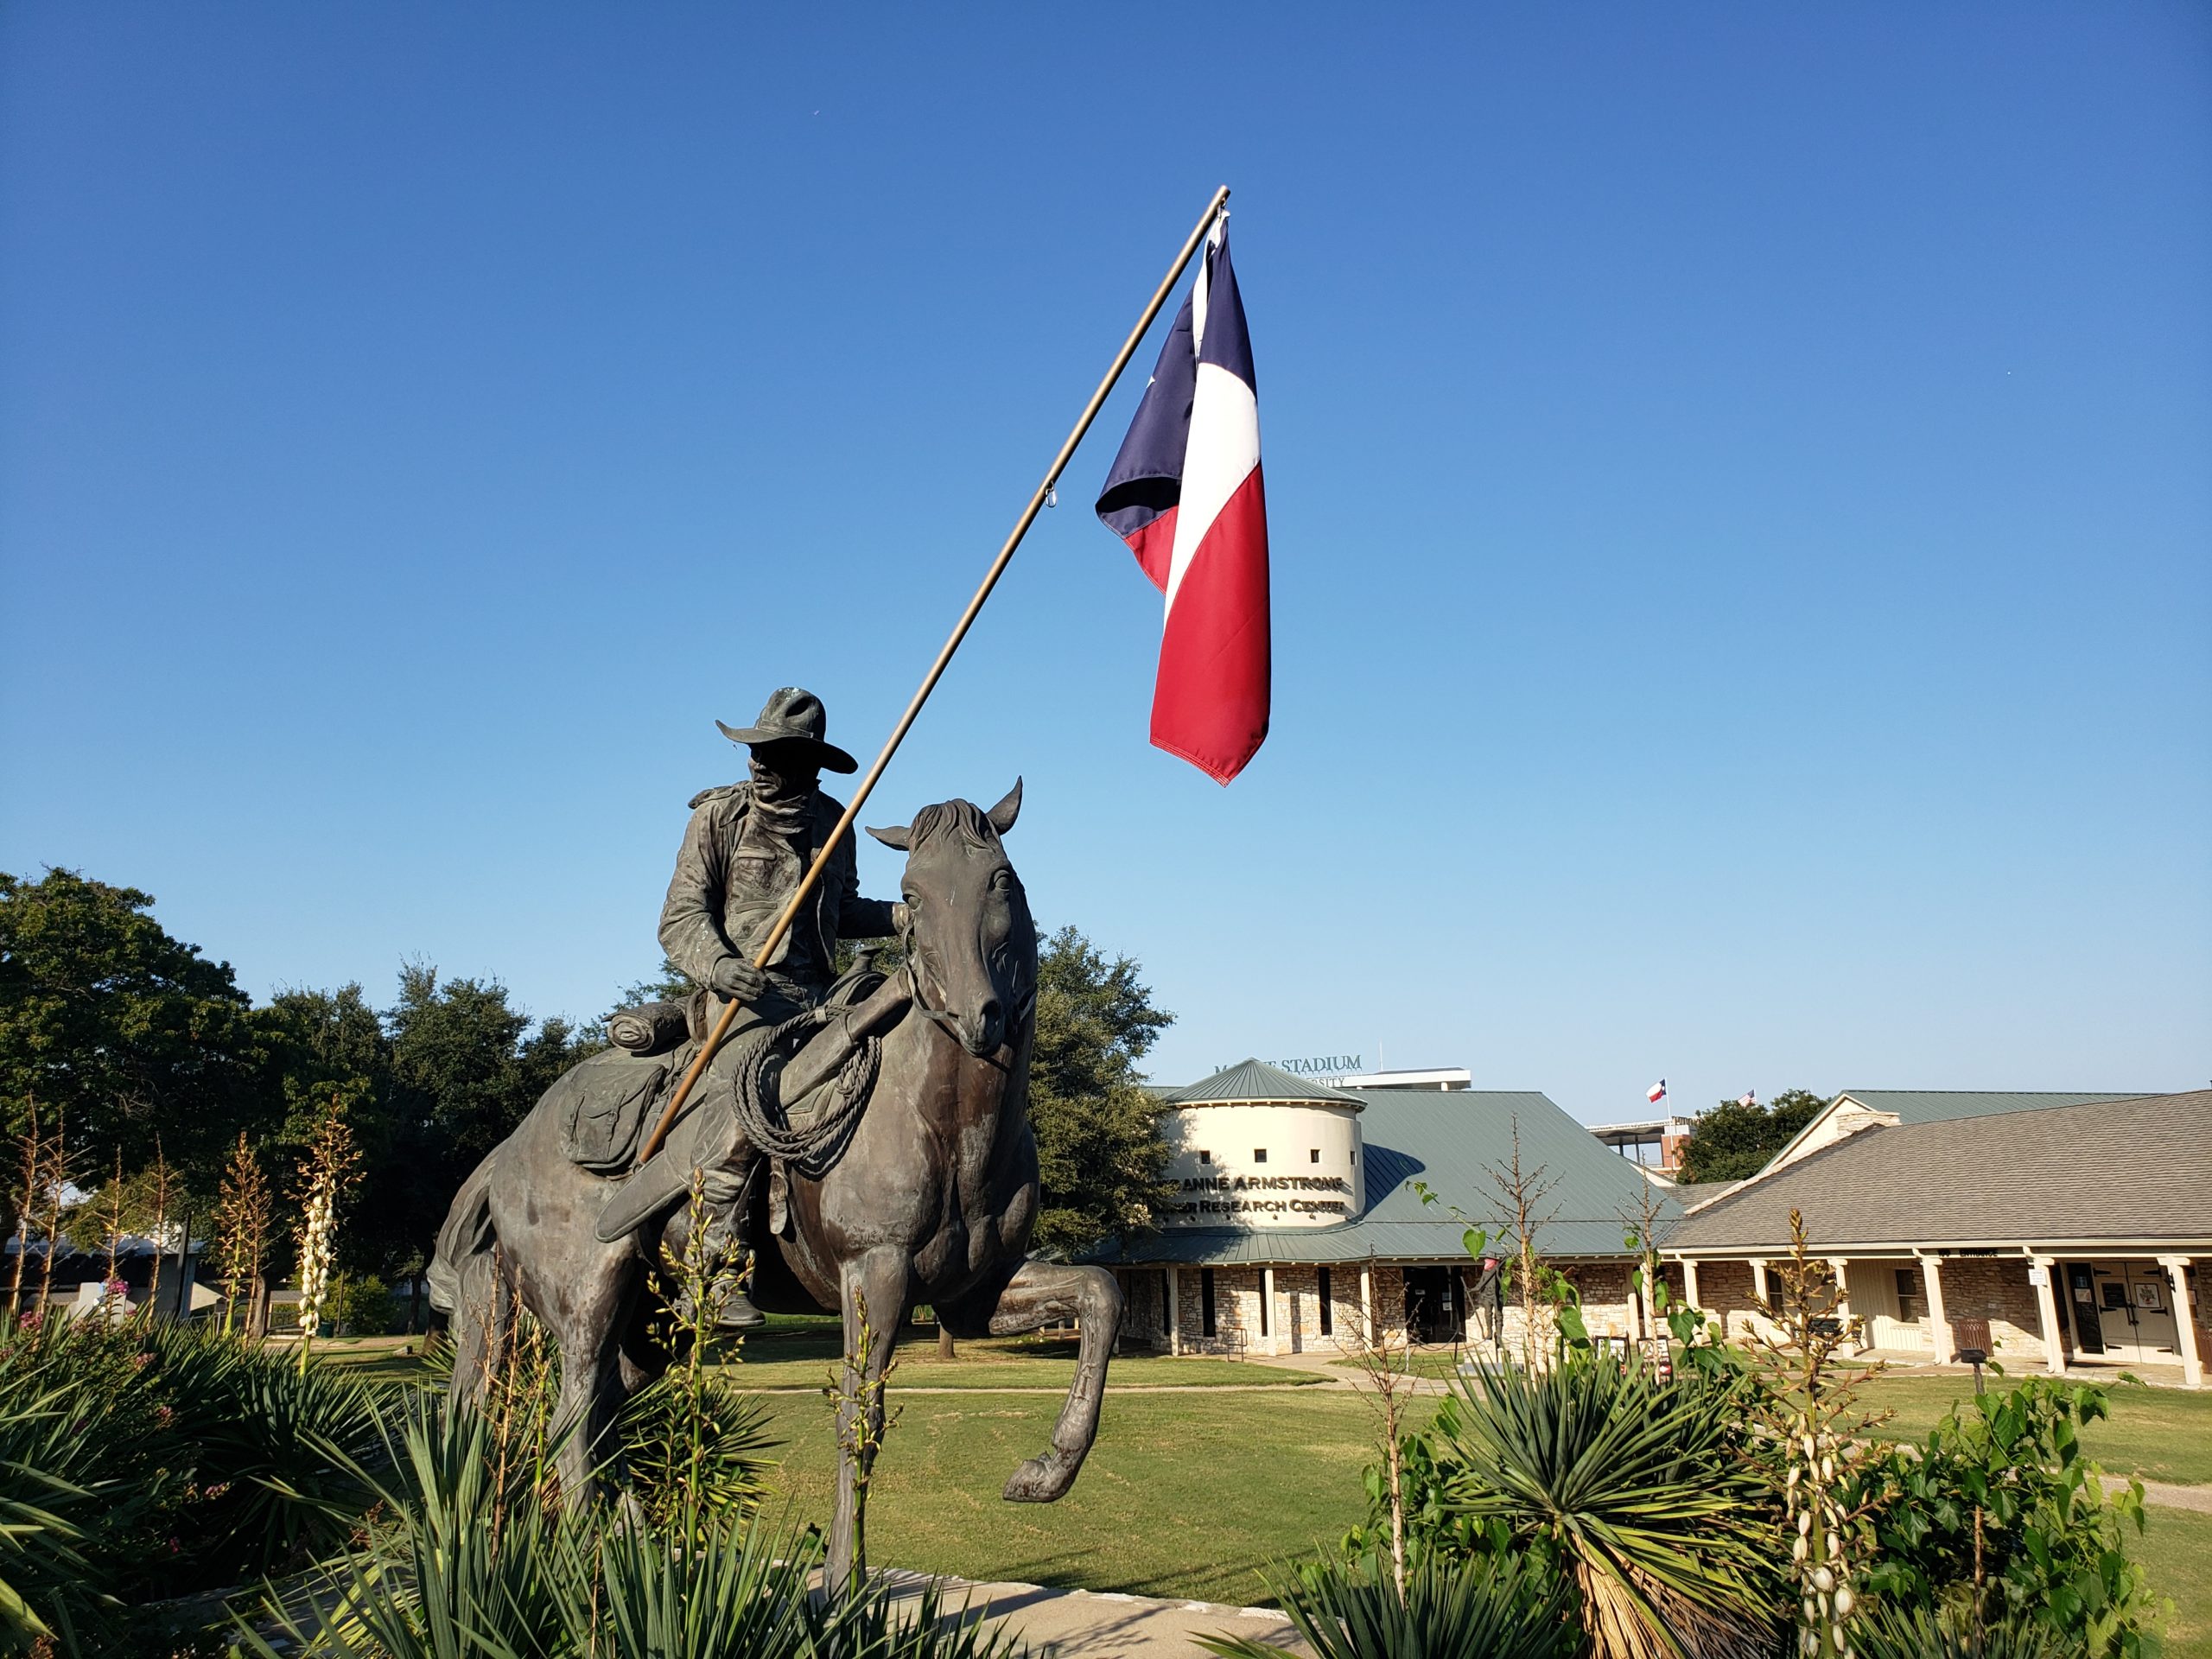 Texas Ranger Hall Of Fame & Museum